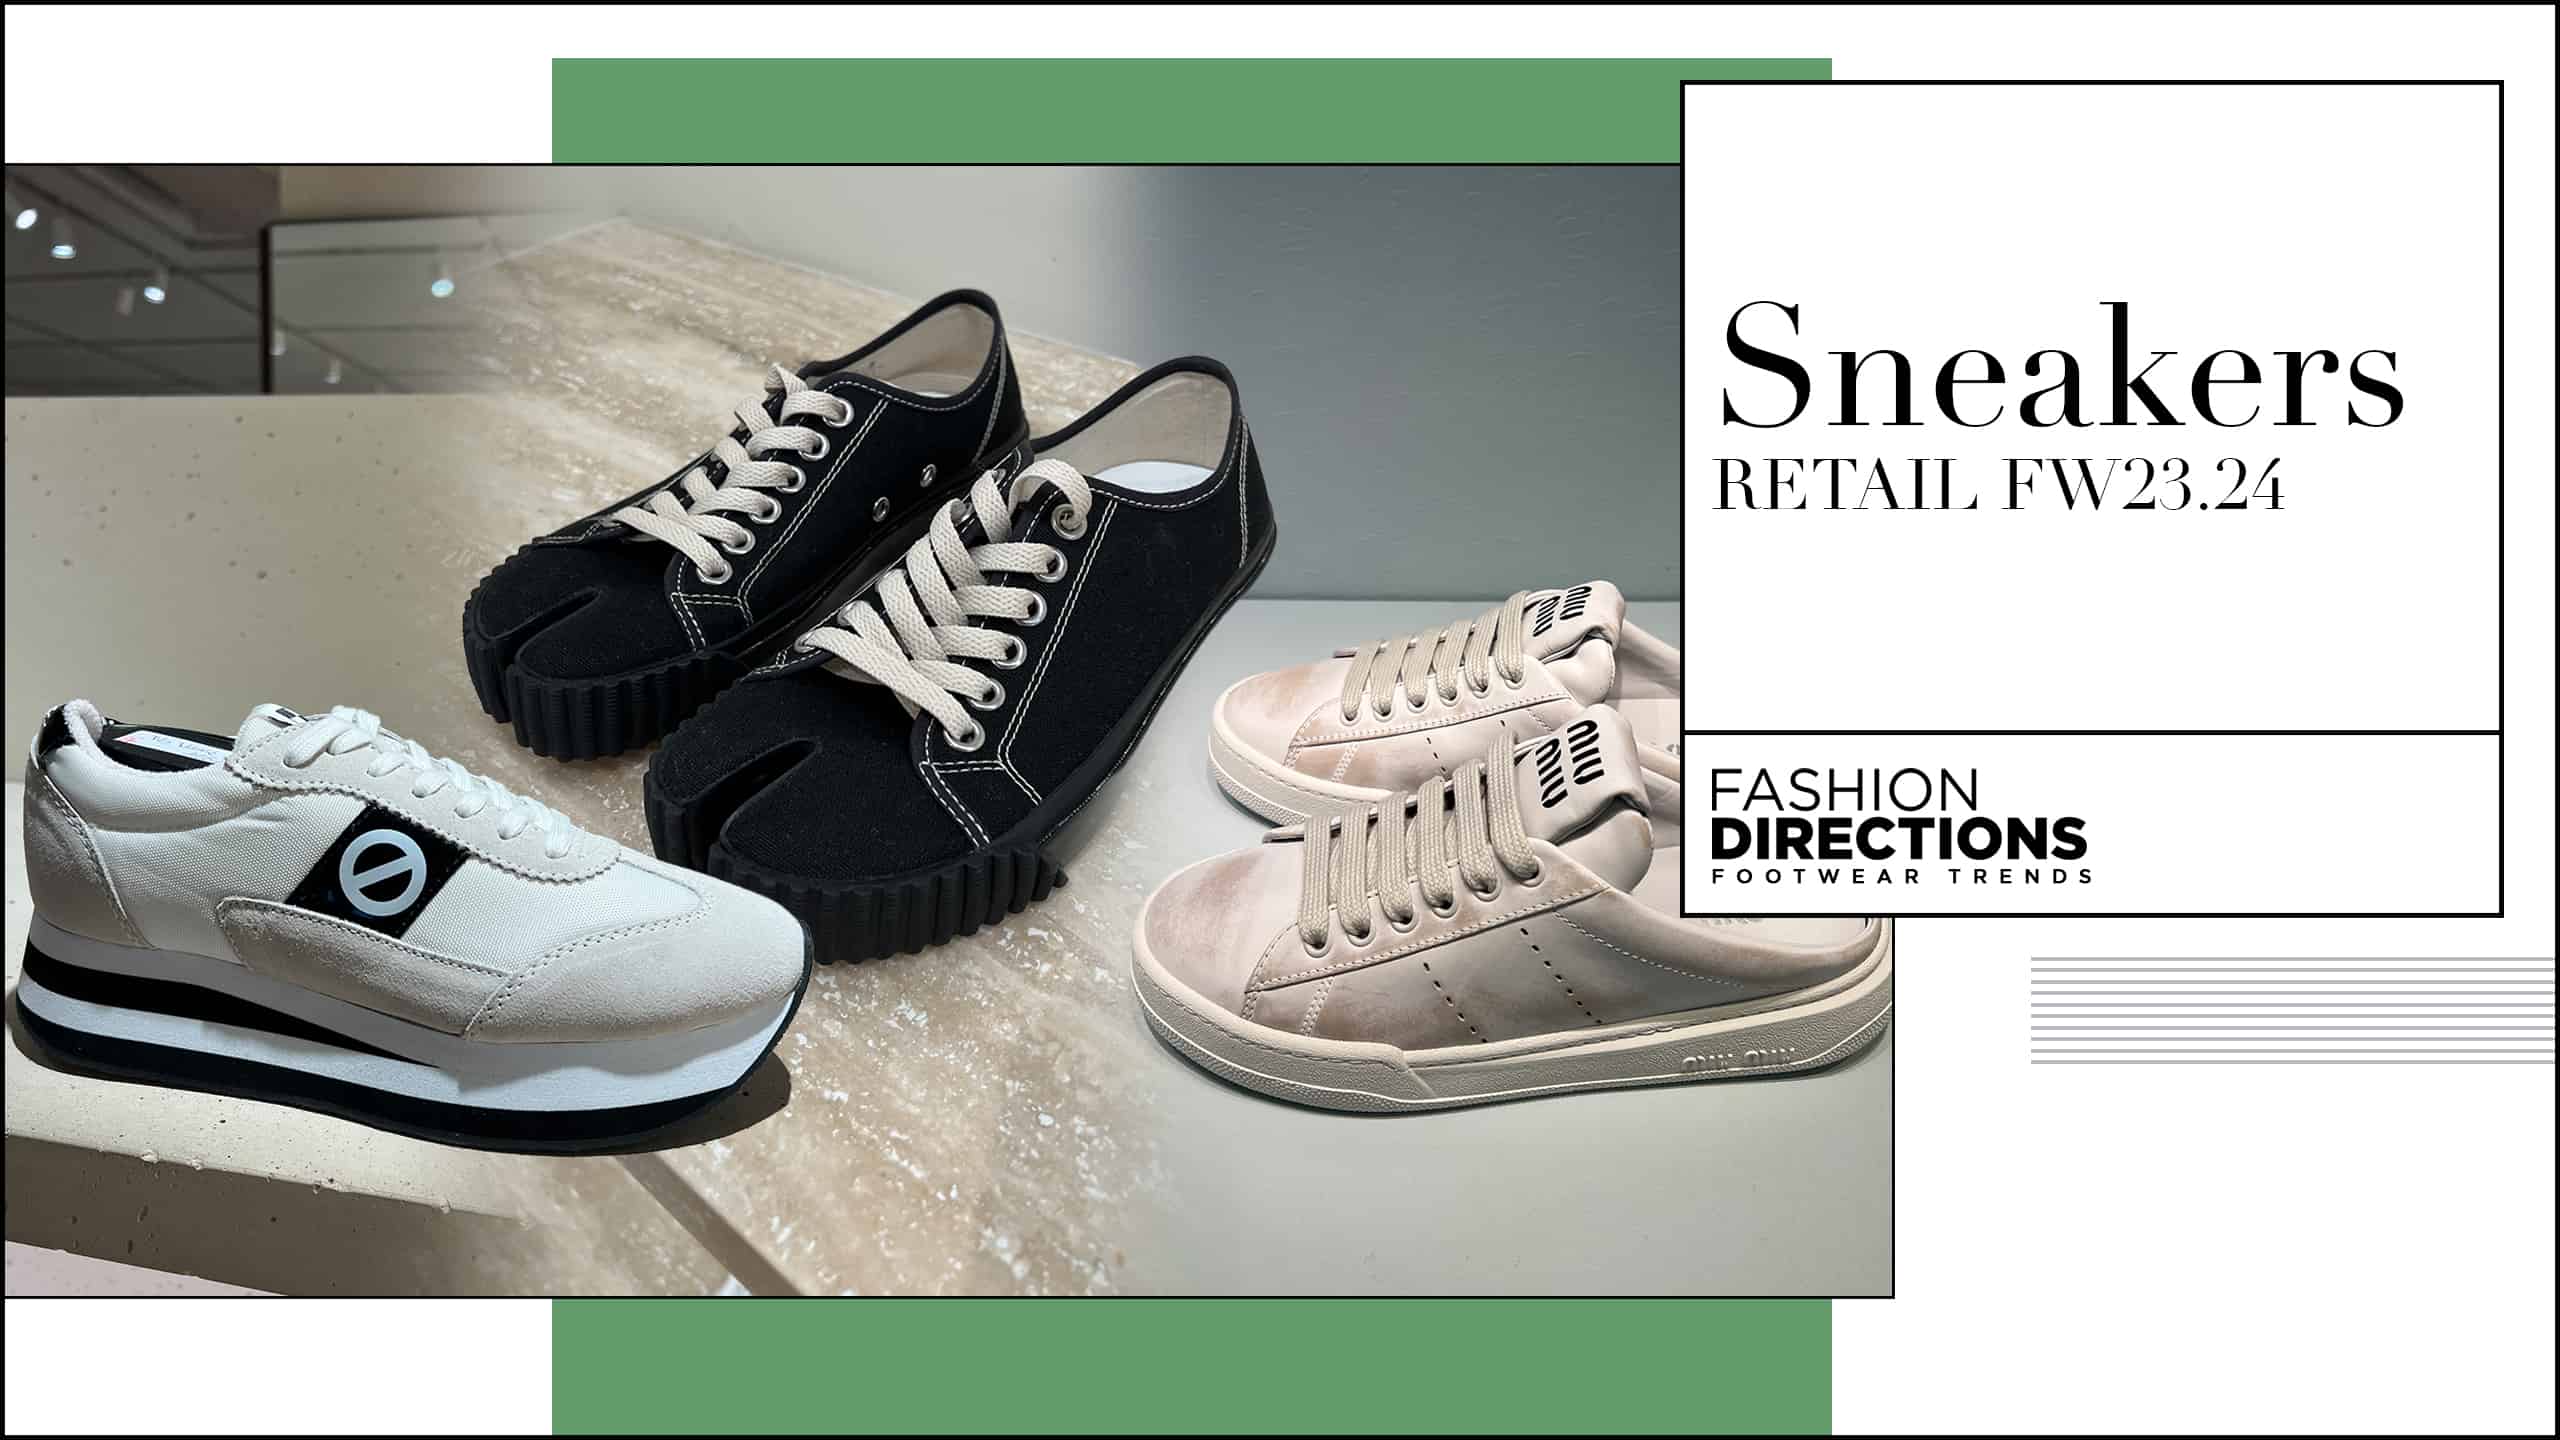 Sneakers Retail fw23.24